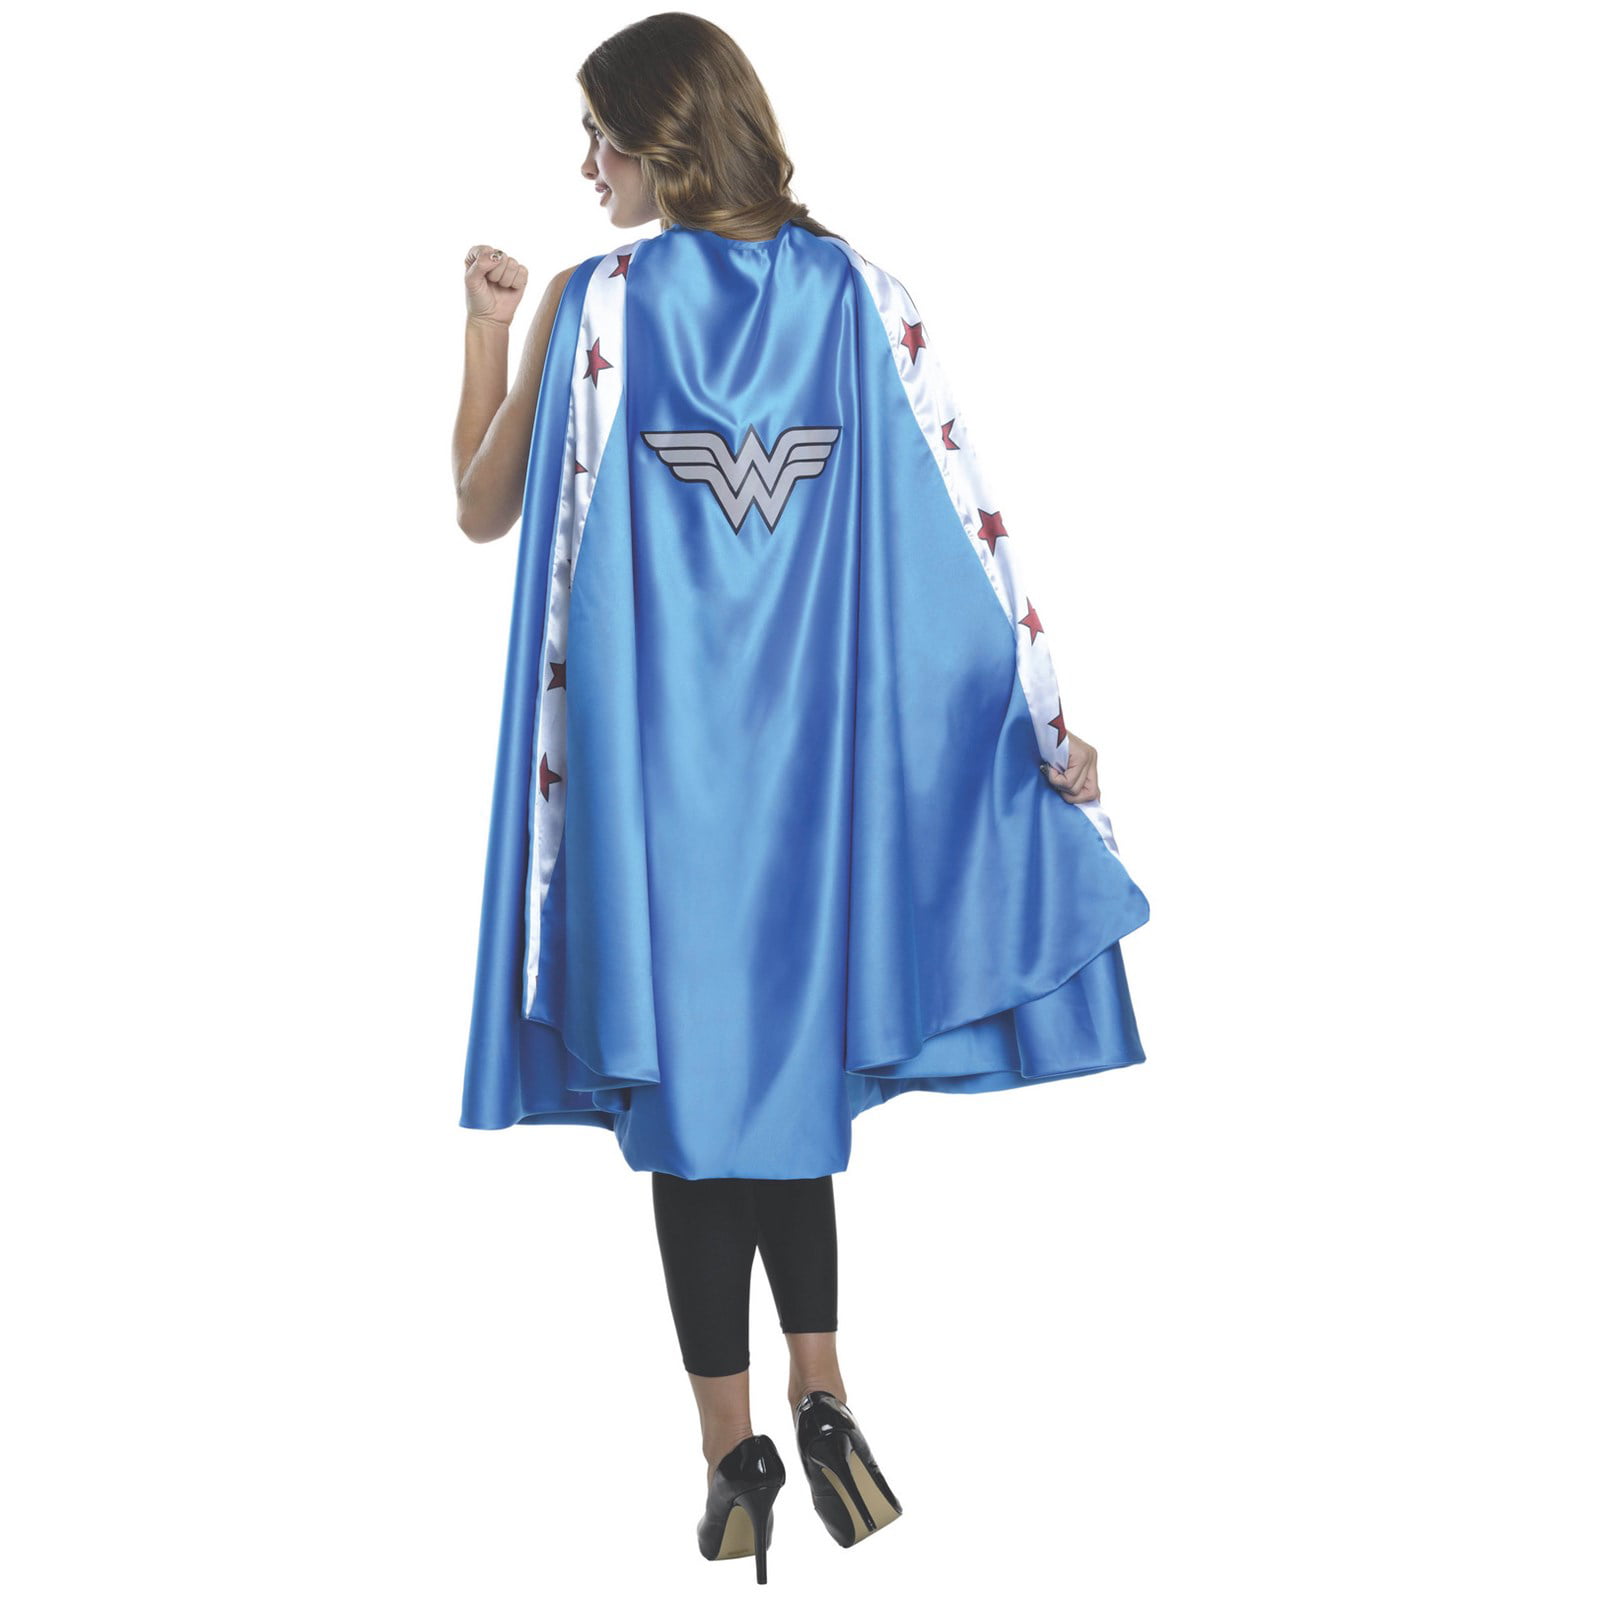 Wonder Woman Wonderwoman Hooded Cape Adult Costume Accessory NEW Justice League 